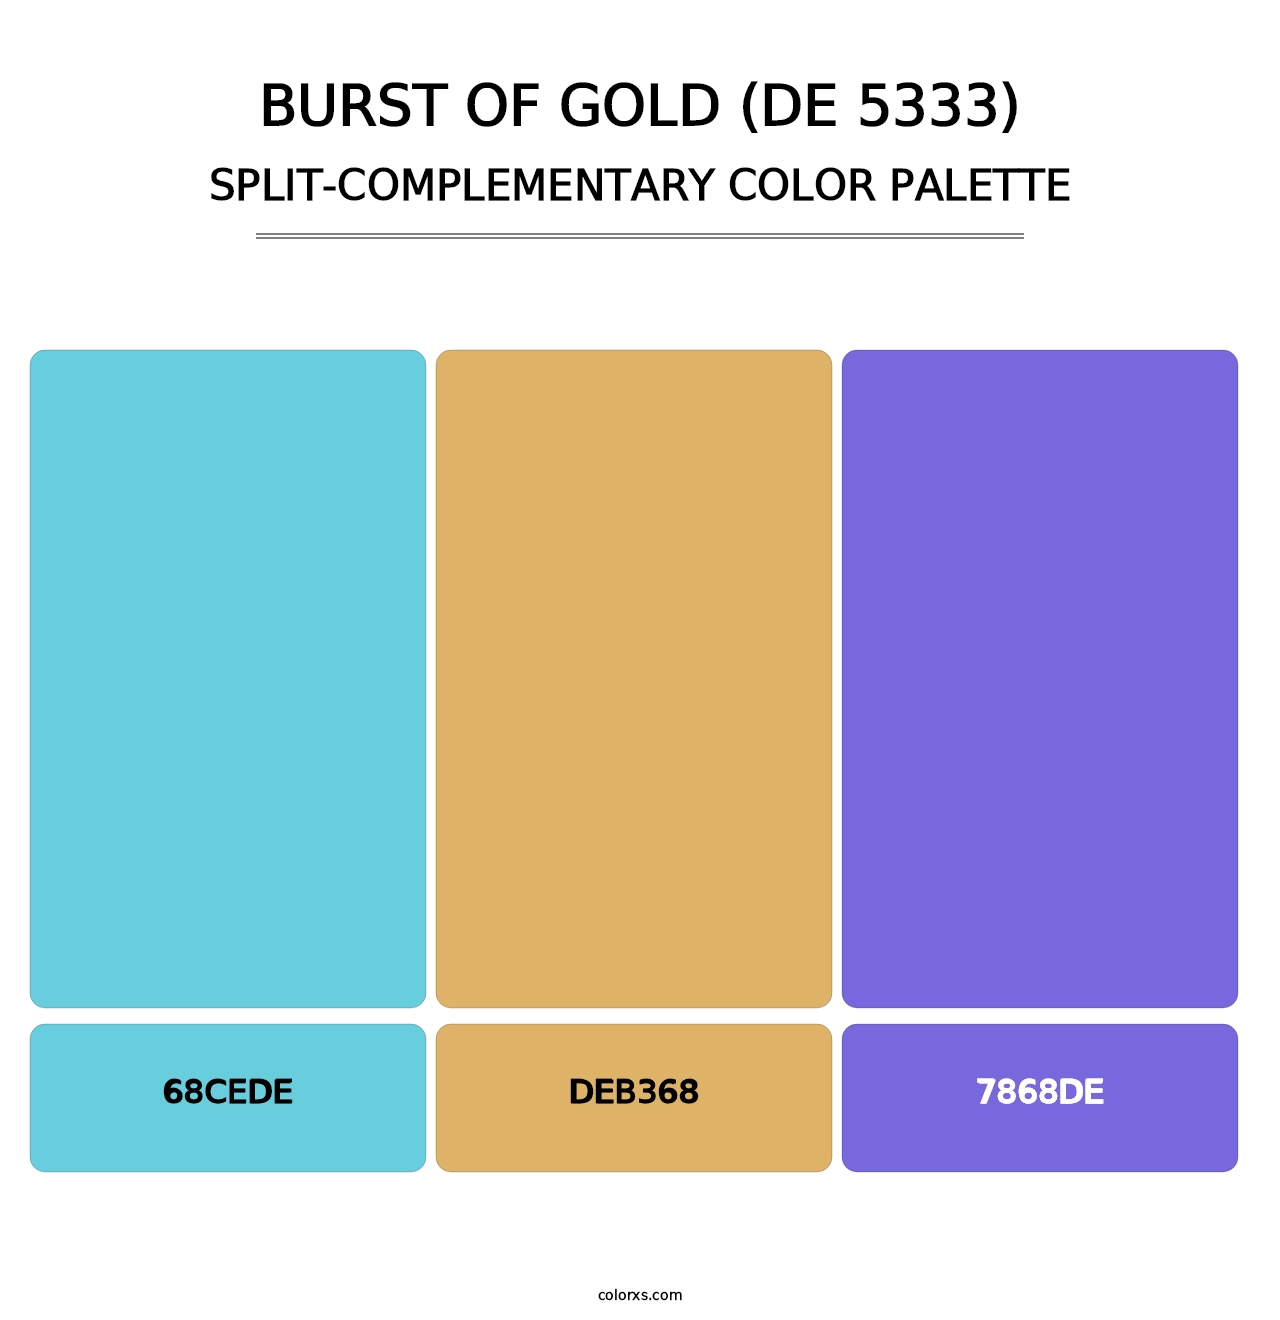 Burst of Gold (DE 5333) - Split-Complementary Color Palette